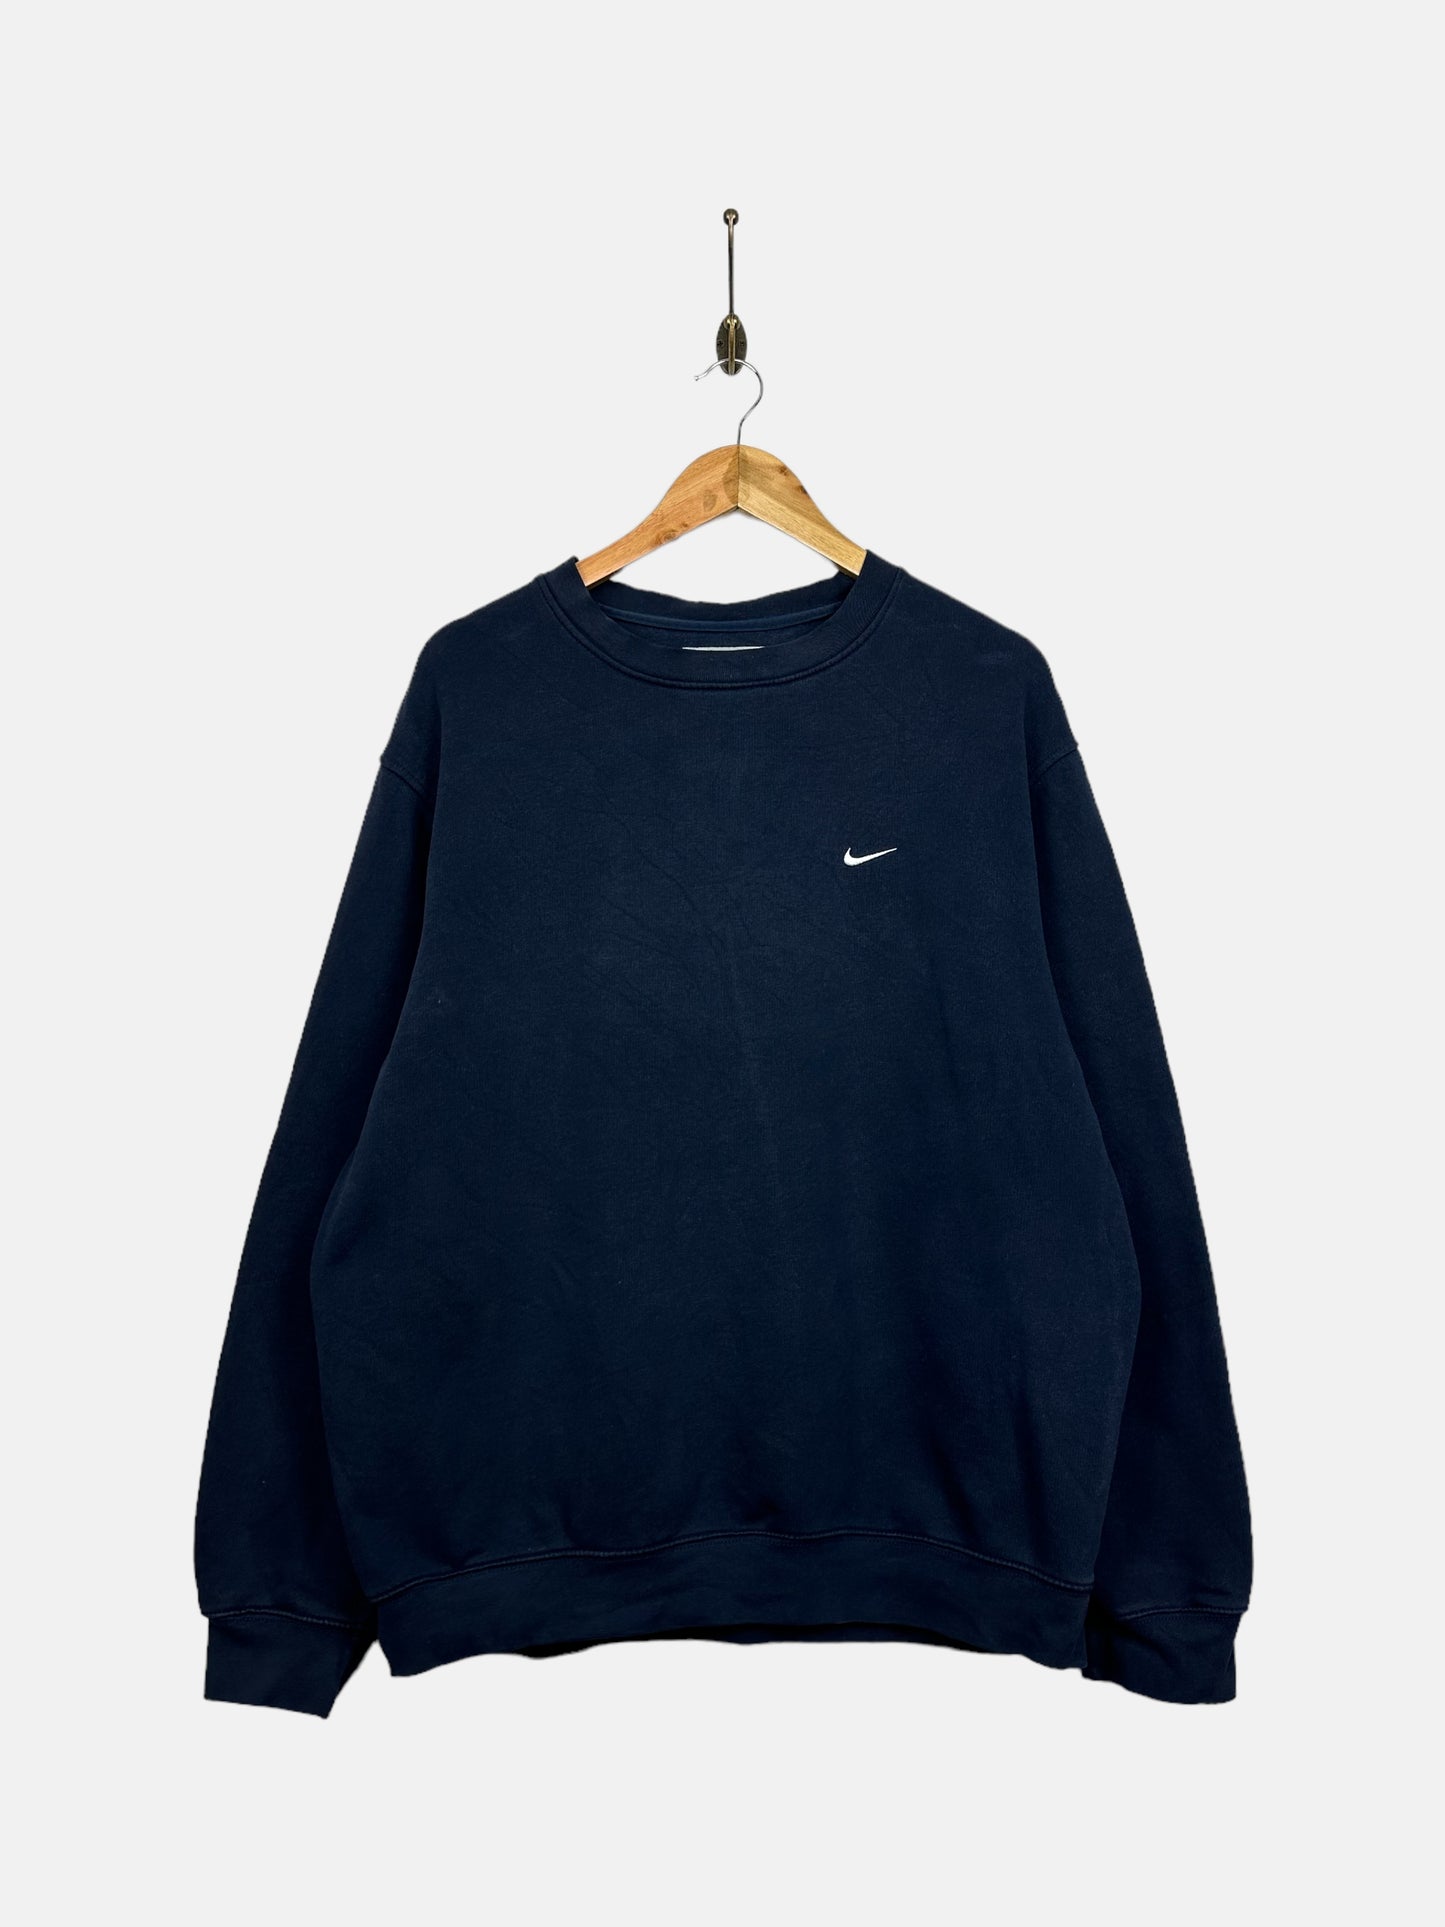 90's Nike Embroidered Vintage Sweatshirt Size L